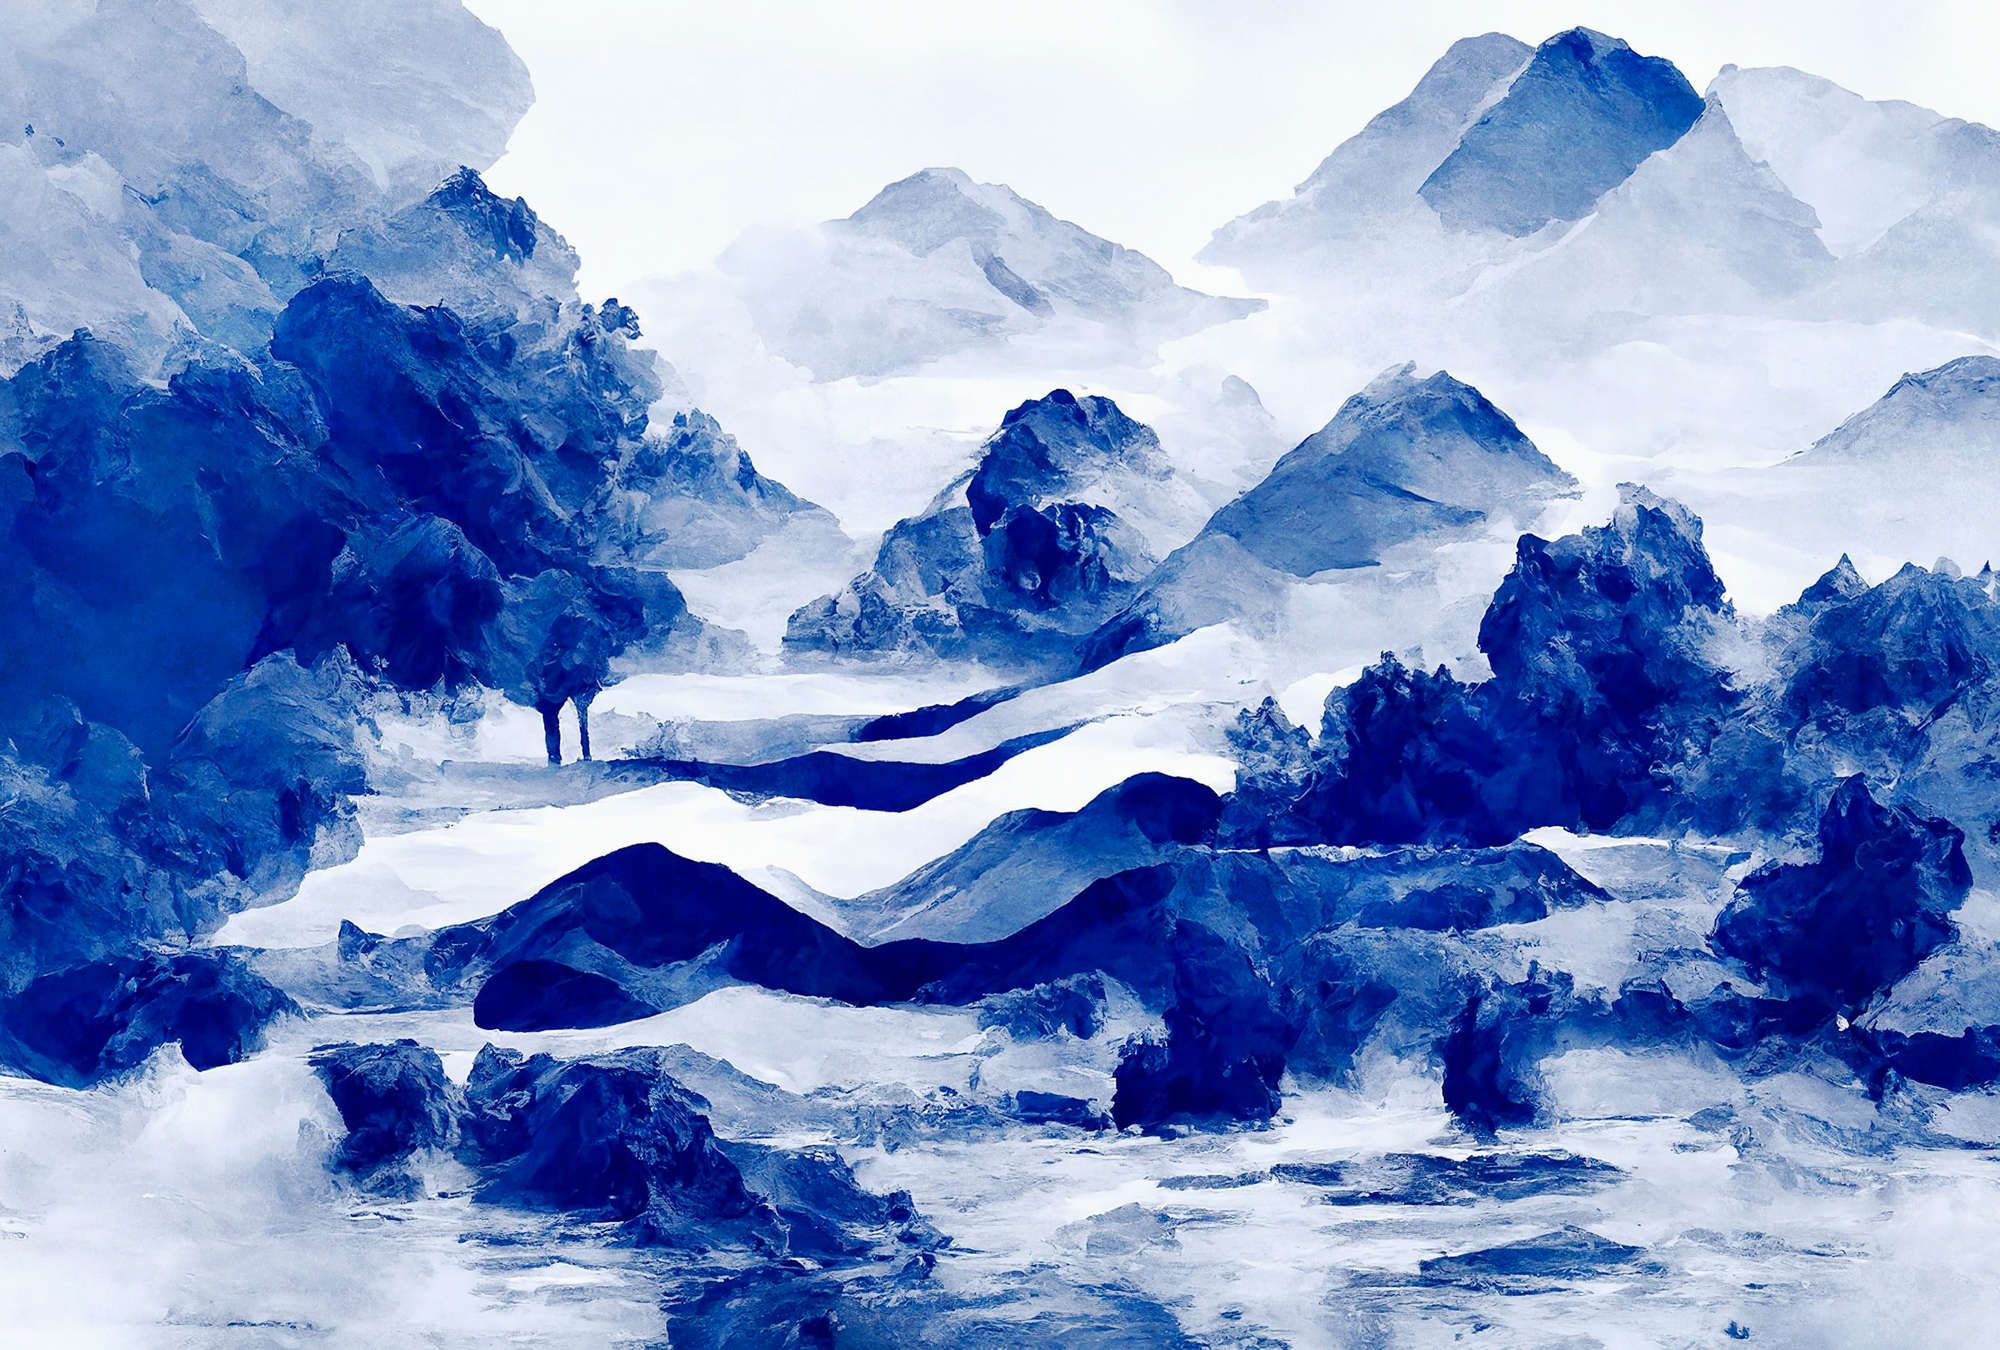             Digital behang »tinterra 3« - Landschap met bergen & mist - Blauw | Gladde, licht parelmoerglanzende vliesstof
        